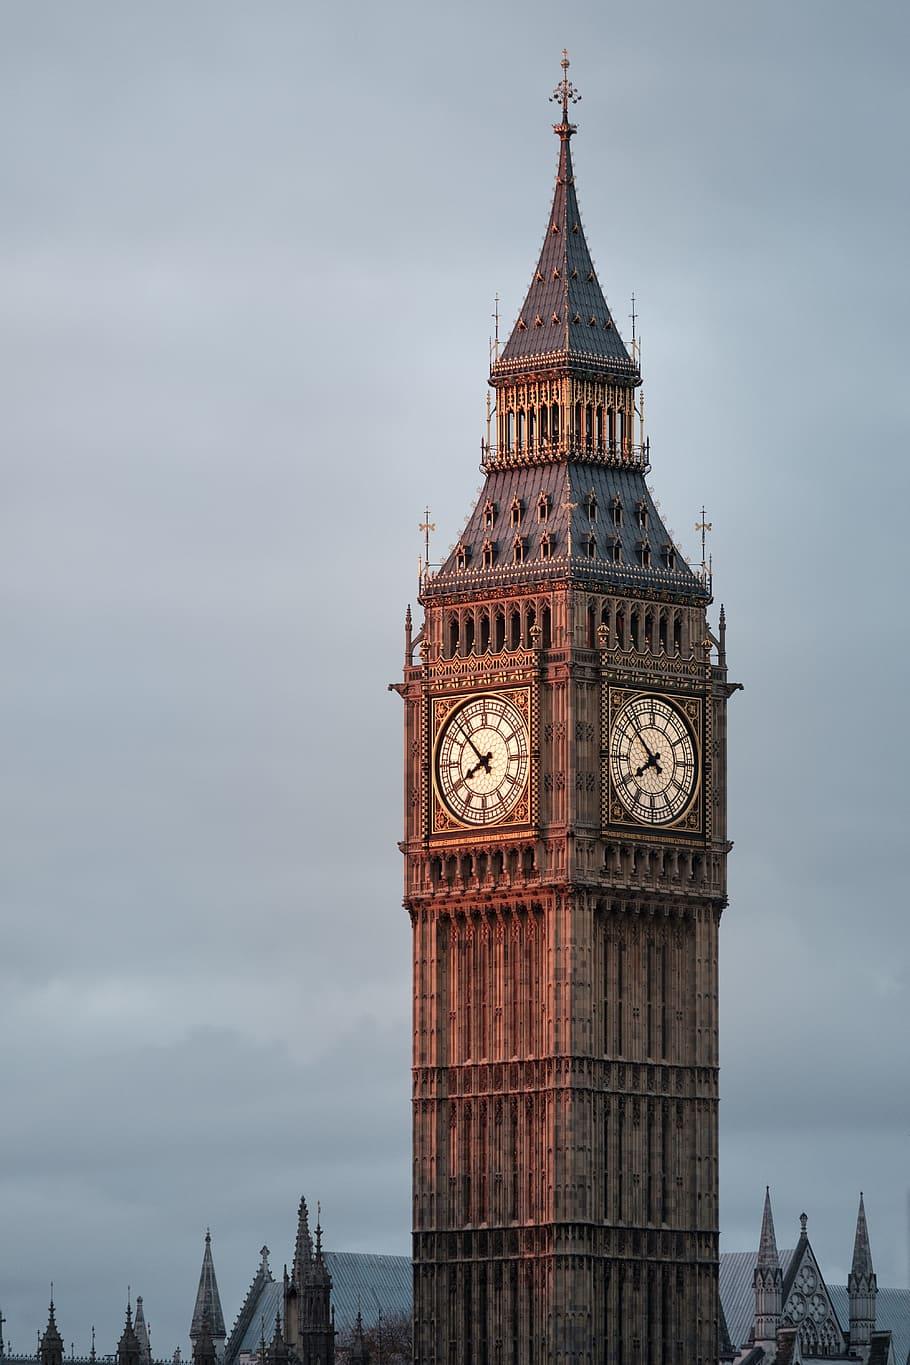 HD wallpaper: Elizabeth Tower, London, photo of Big Ben